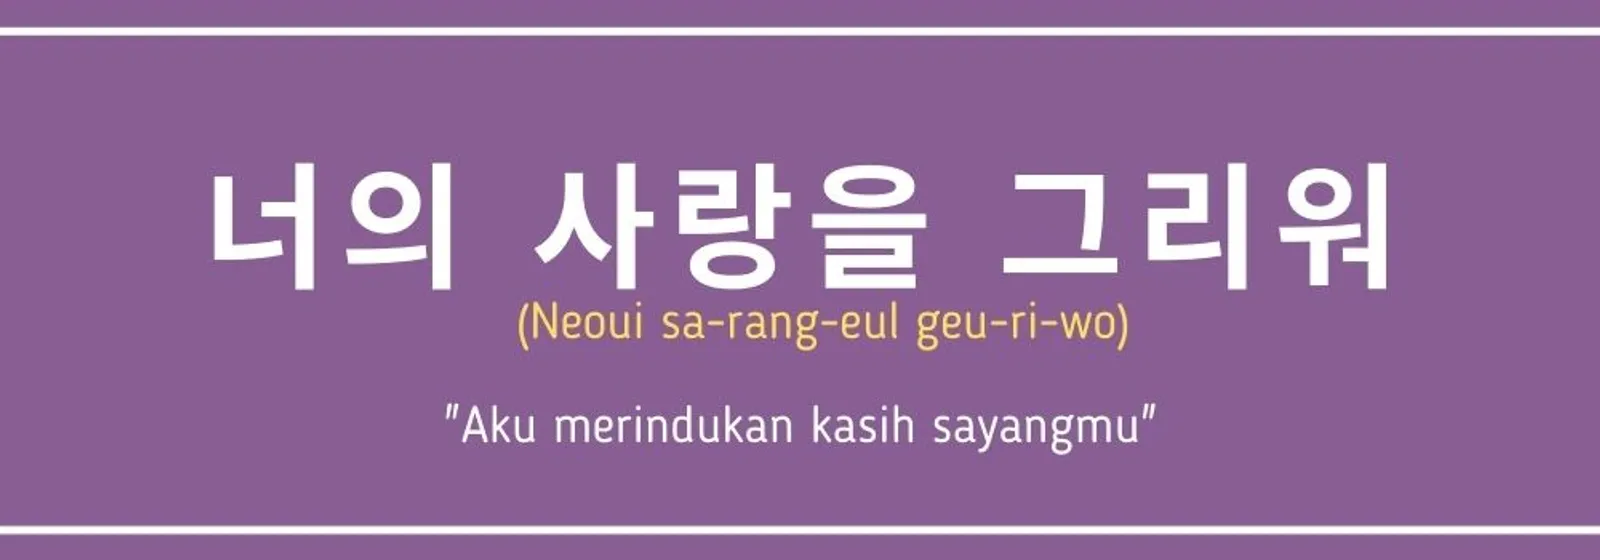 7 Cara Ungkapkan Rasa Rindu dalam Bahasa Korea